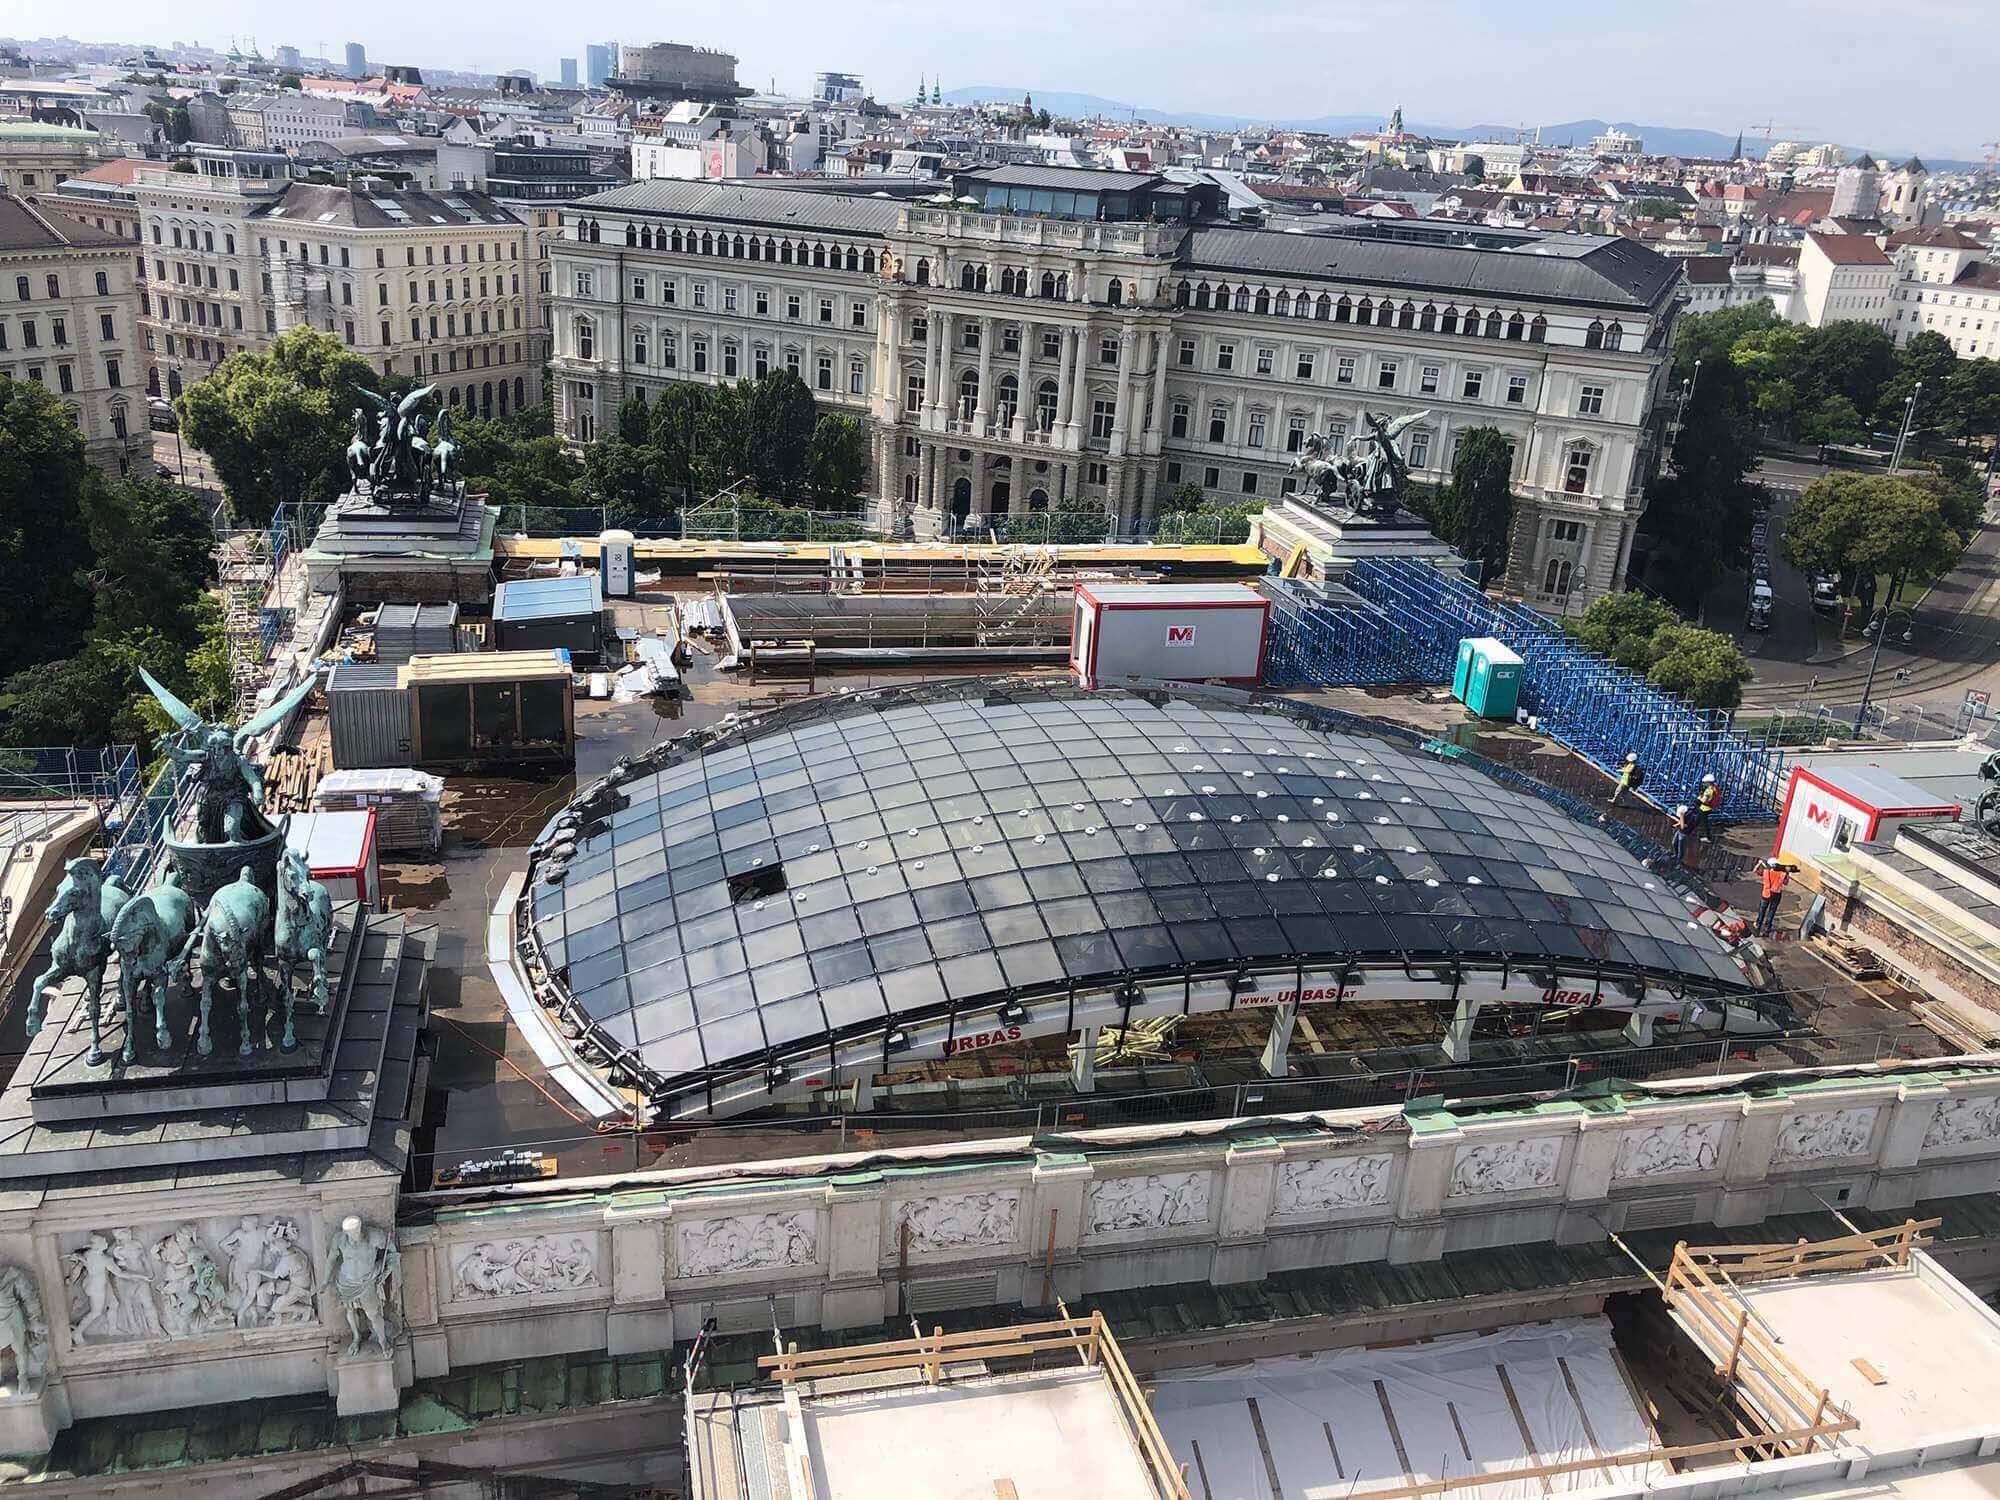 Republic of Austria Parliament, National Council hall - glass roof